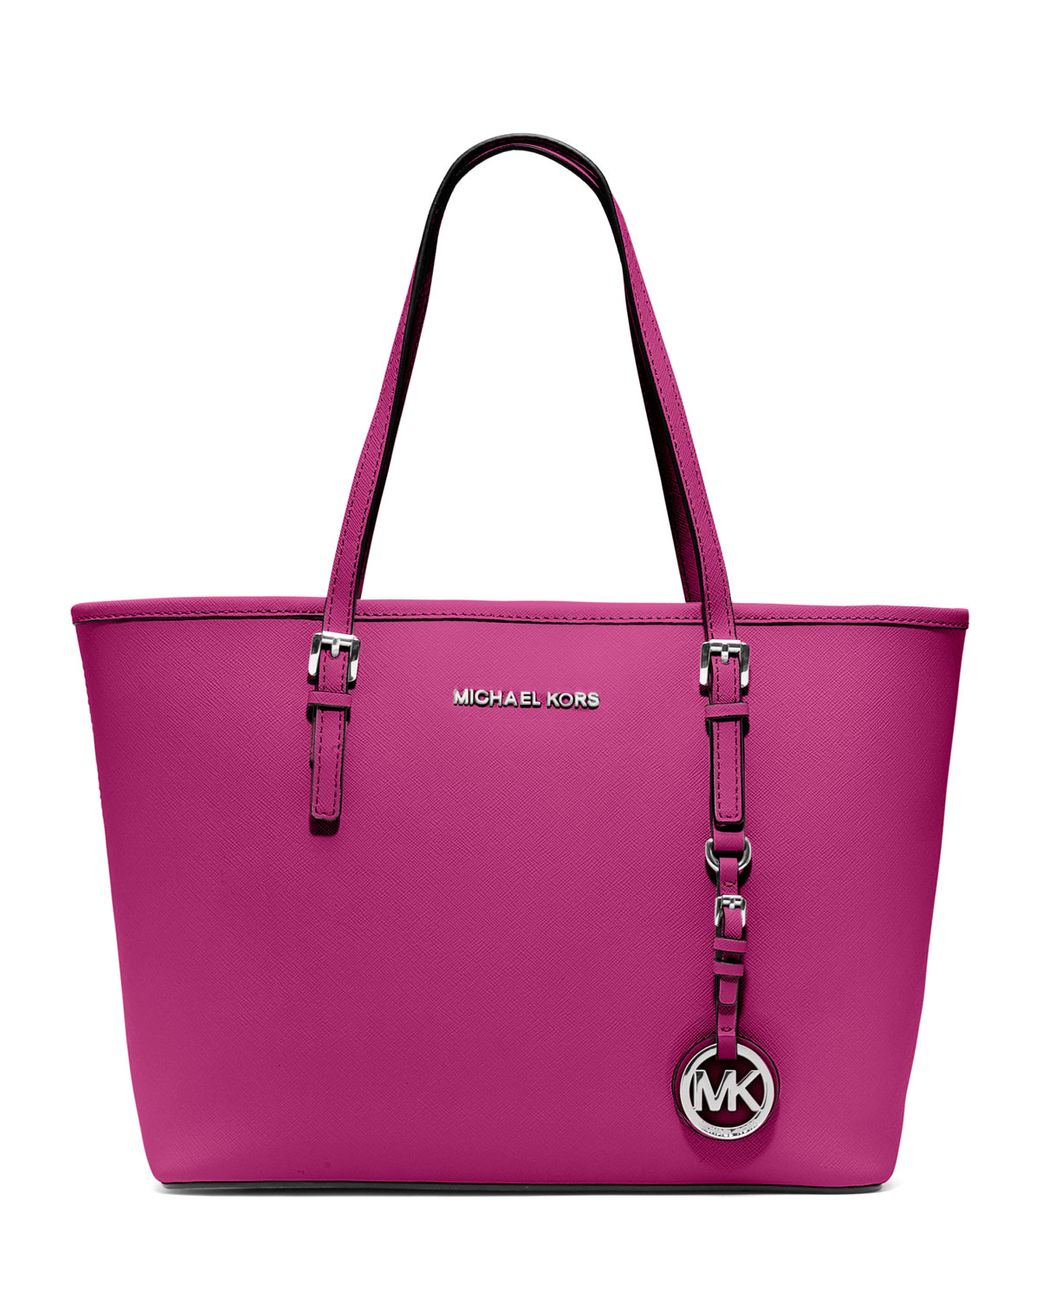 Actualizar 45+ imagen michael kors fuschia pink purse